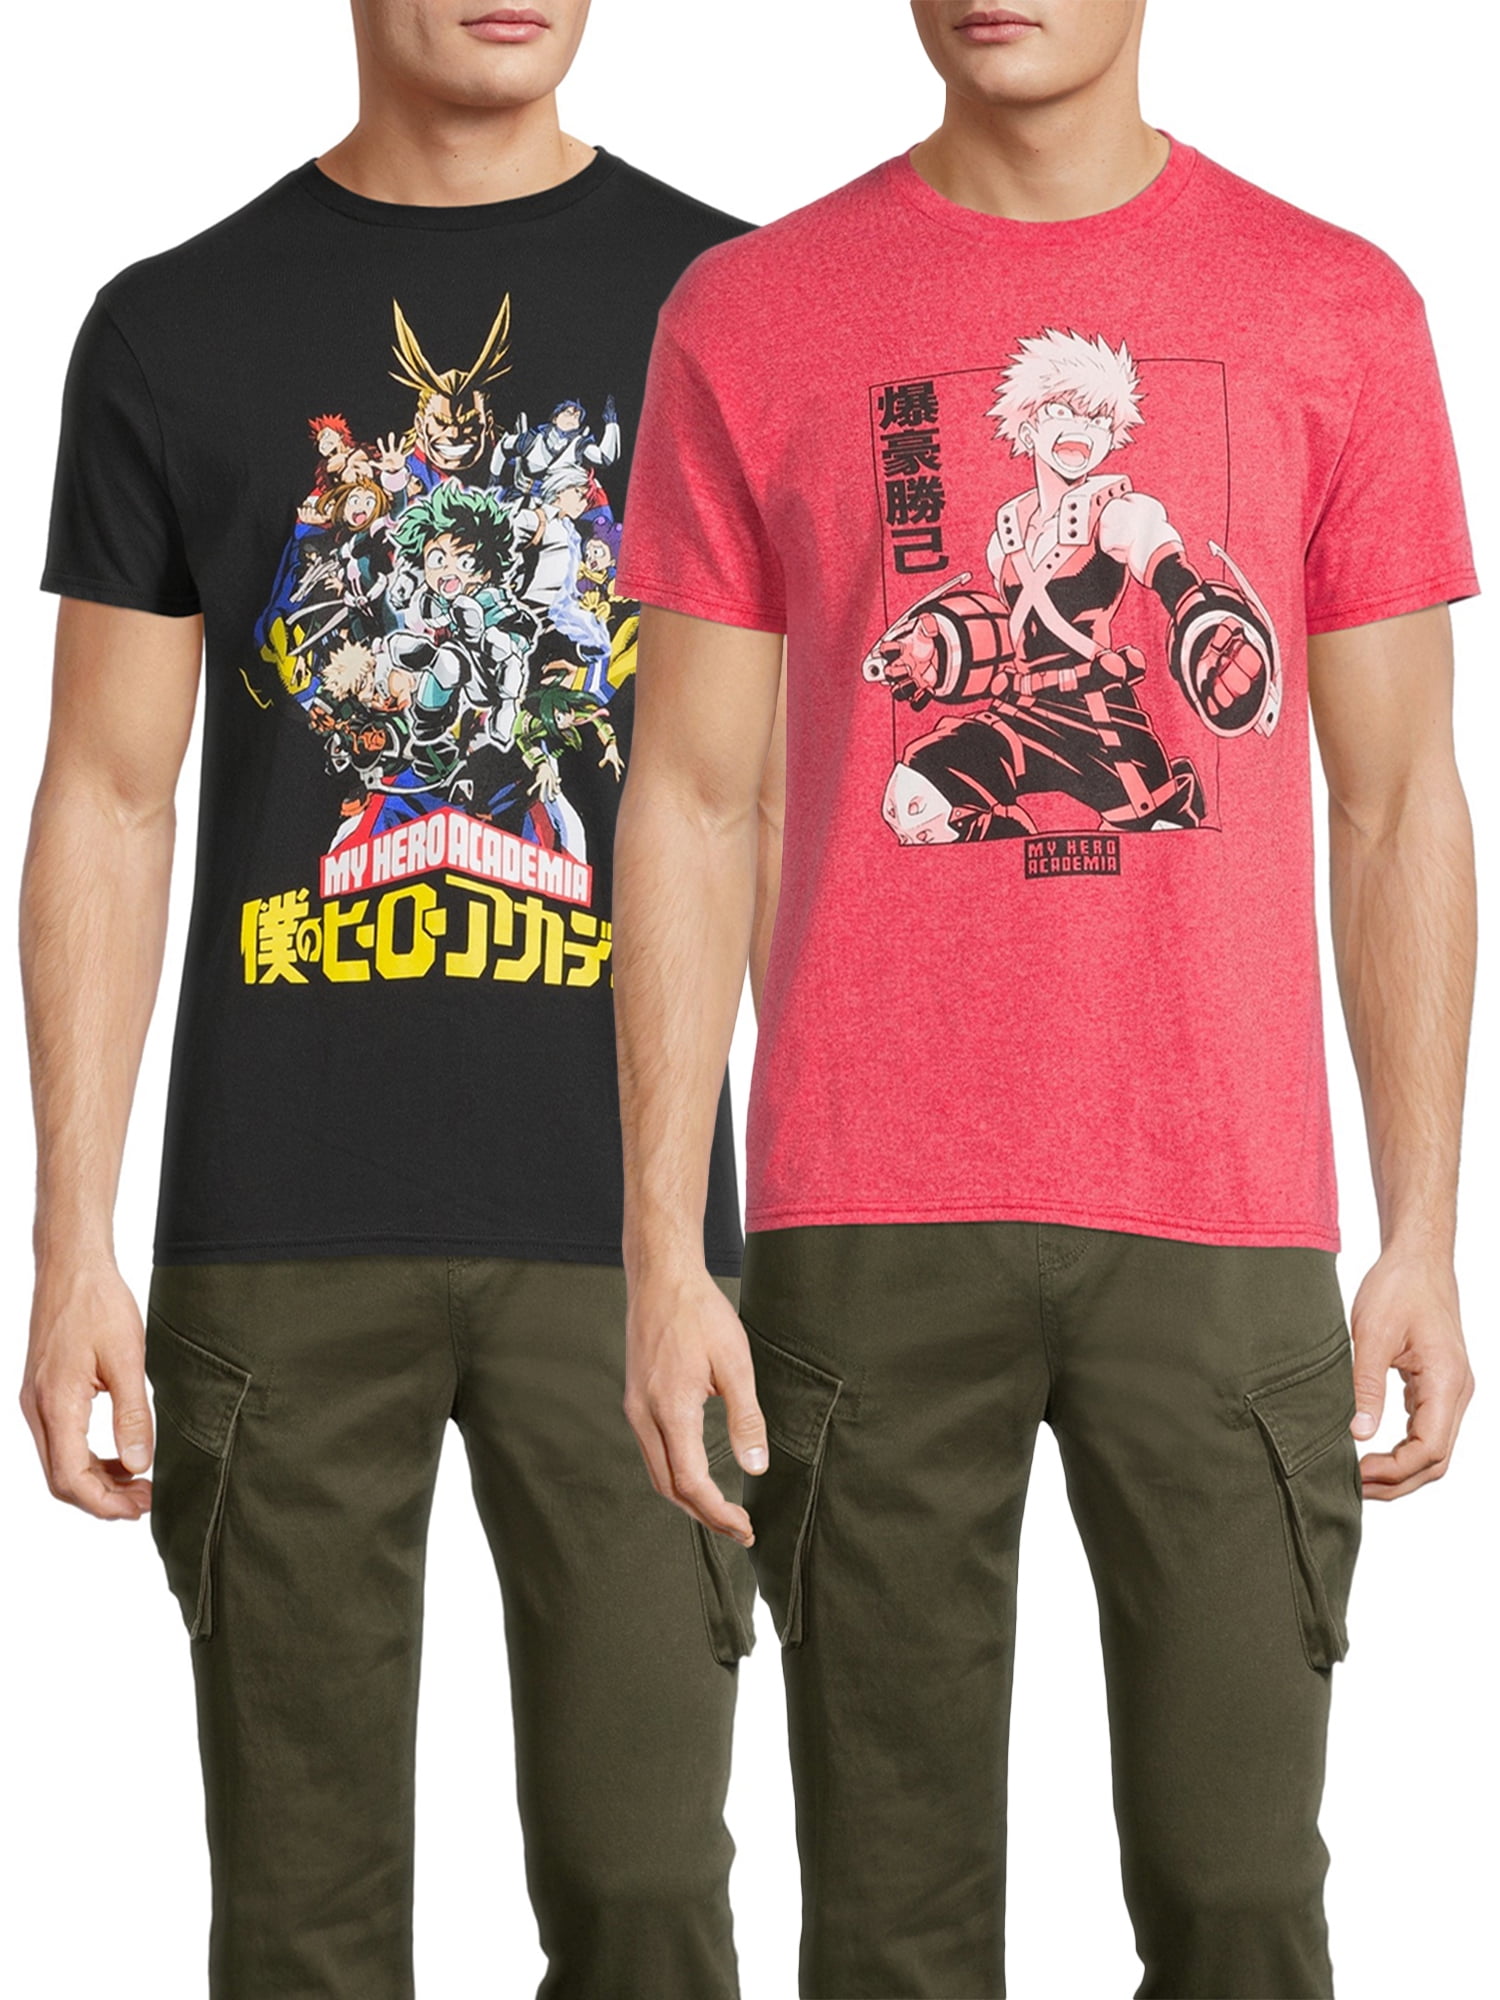 My Hero Academia Men's & Big Men's Anime Graphic Tees Shirts, 2-Pack ...